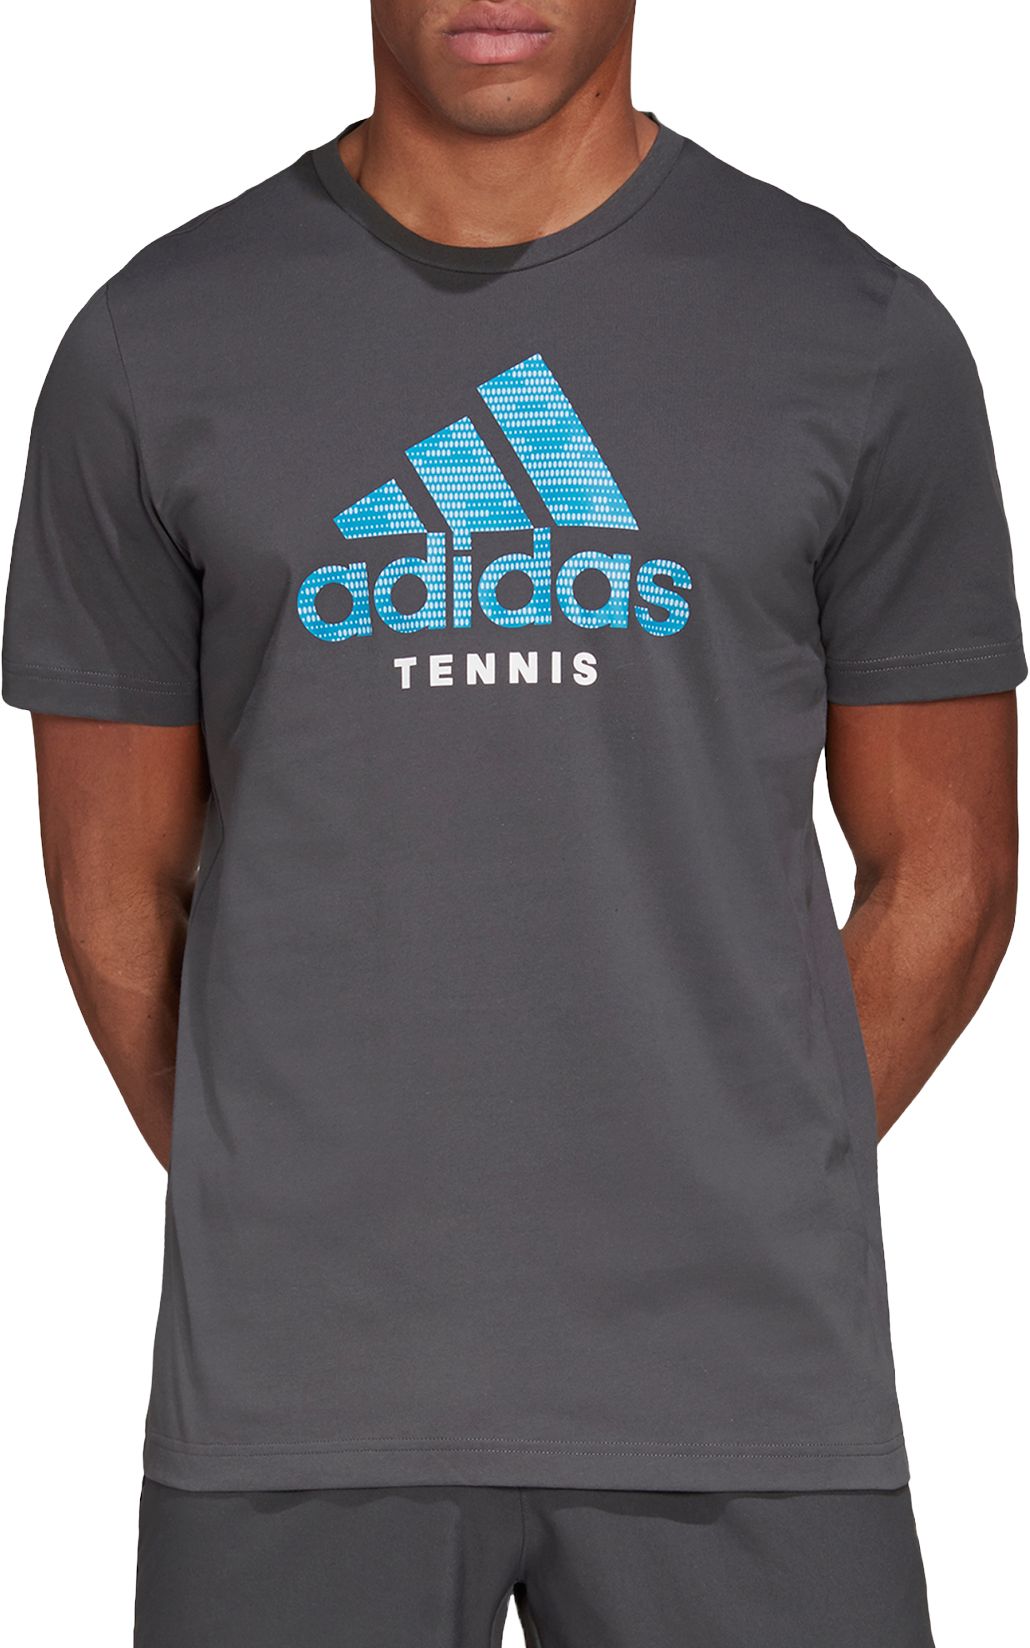 adidas tennis t shirts